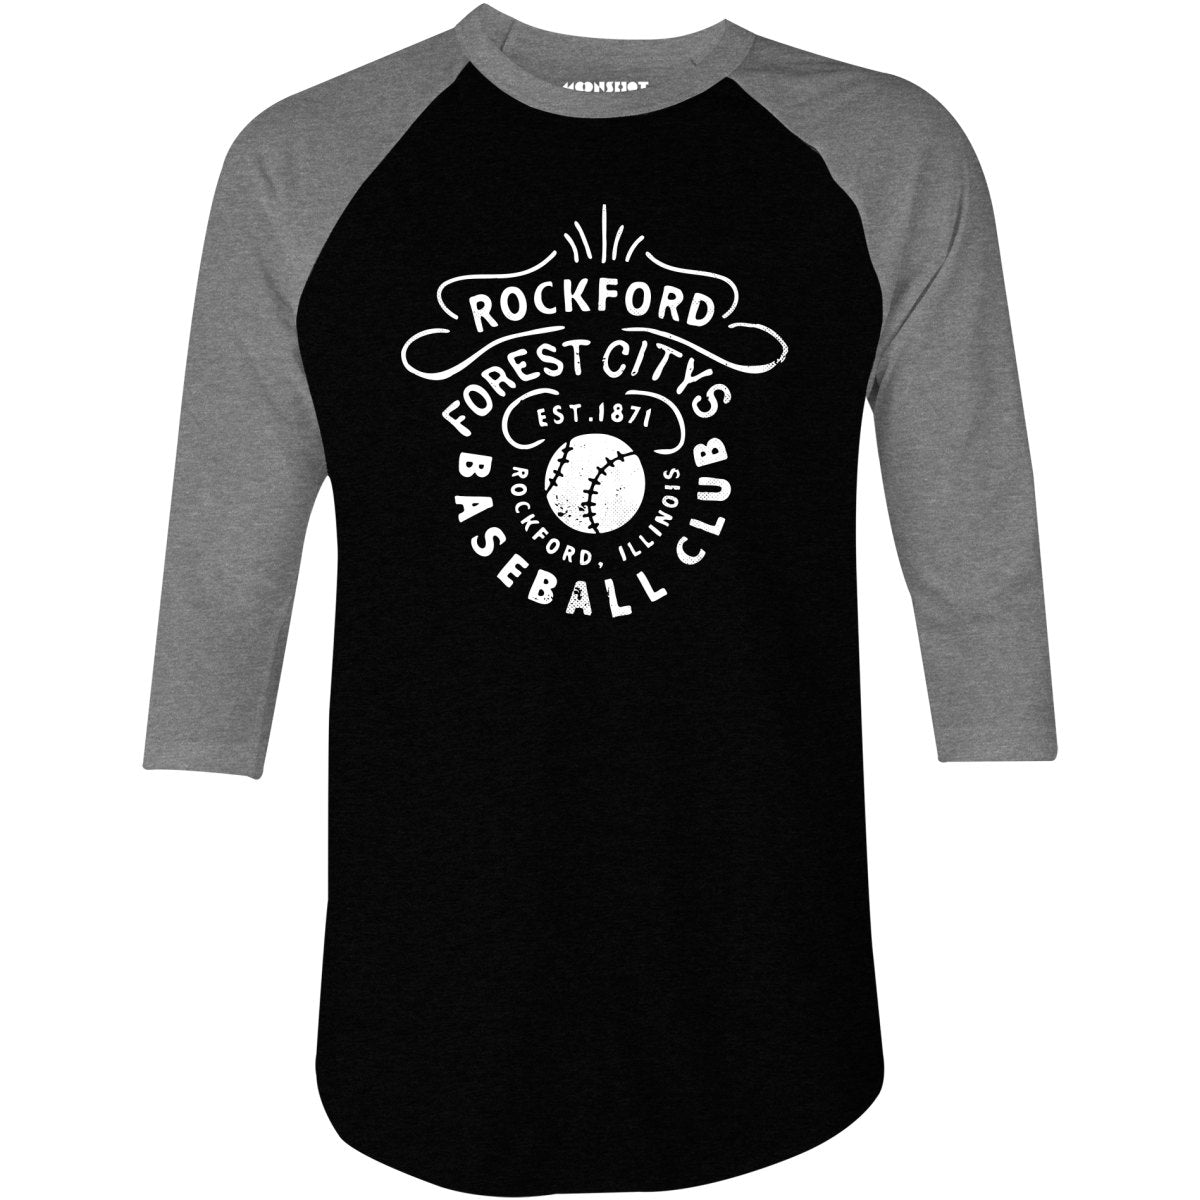 Rockford Forest Citys - Illinois - Vintage Defunct Baseball Teams - 3/4 Sleeve Raglan T-Shirt